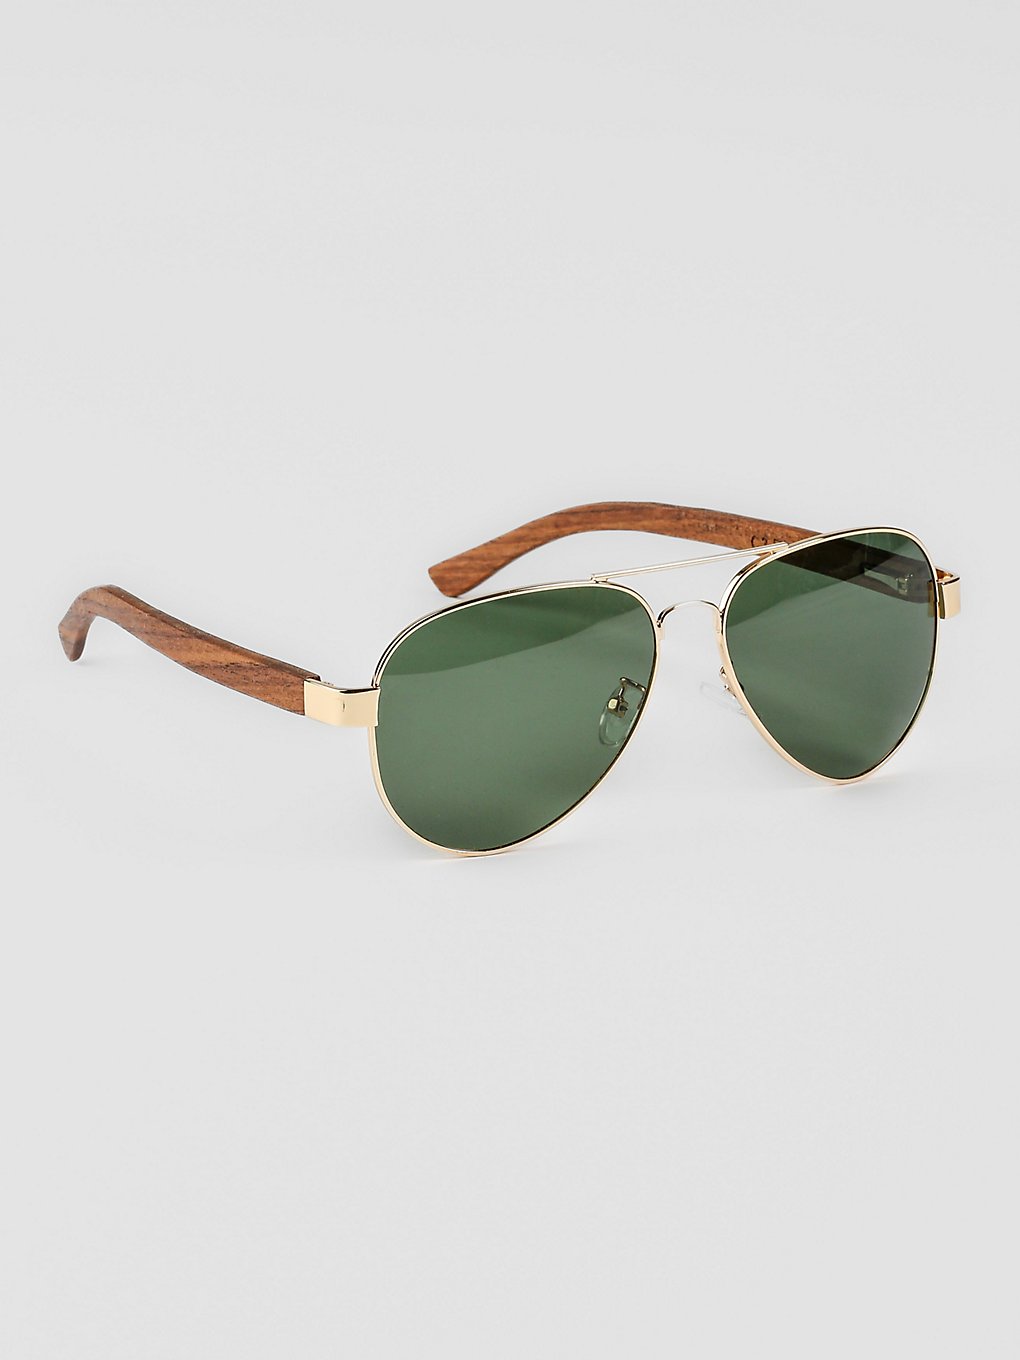 MasterDis Rio Gold Sunglasses green